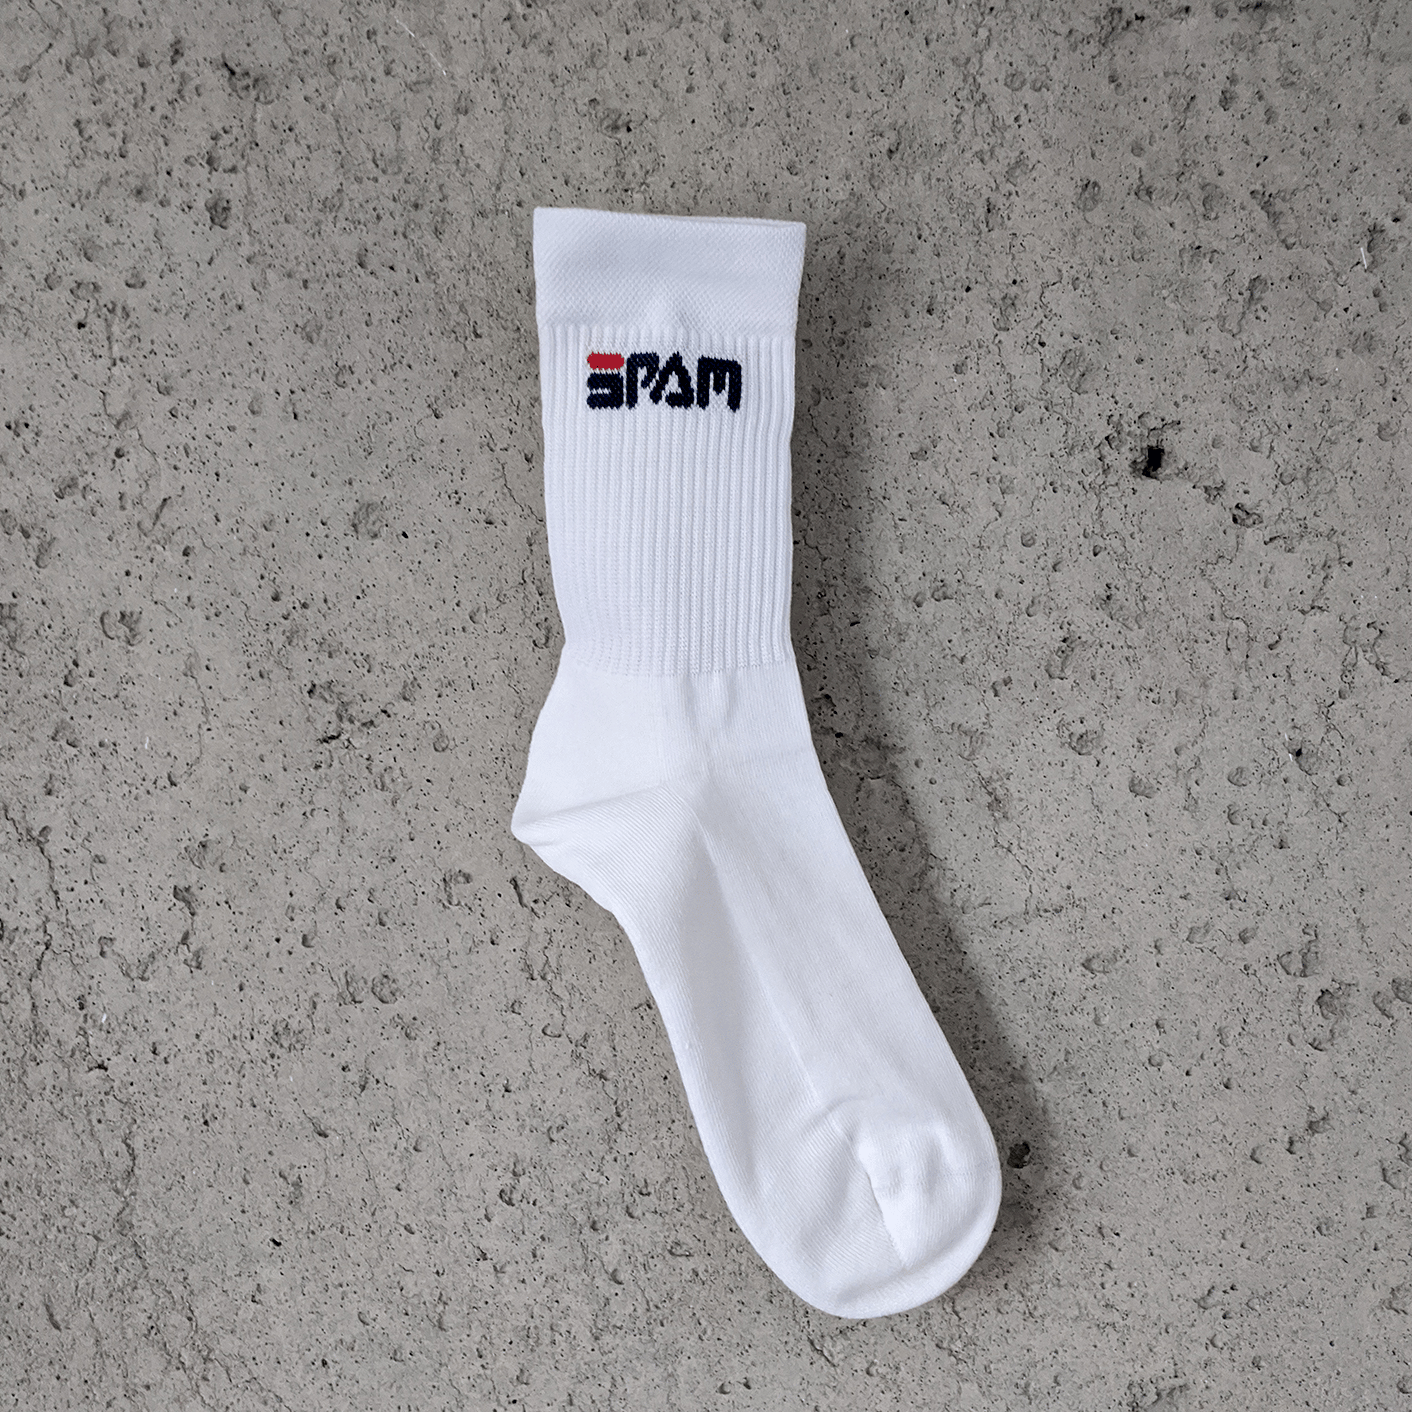 Image of Ultra New Spam Socks